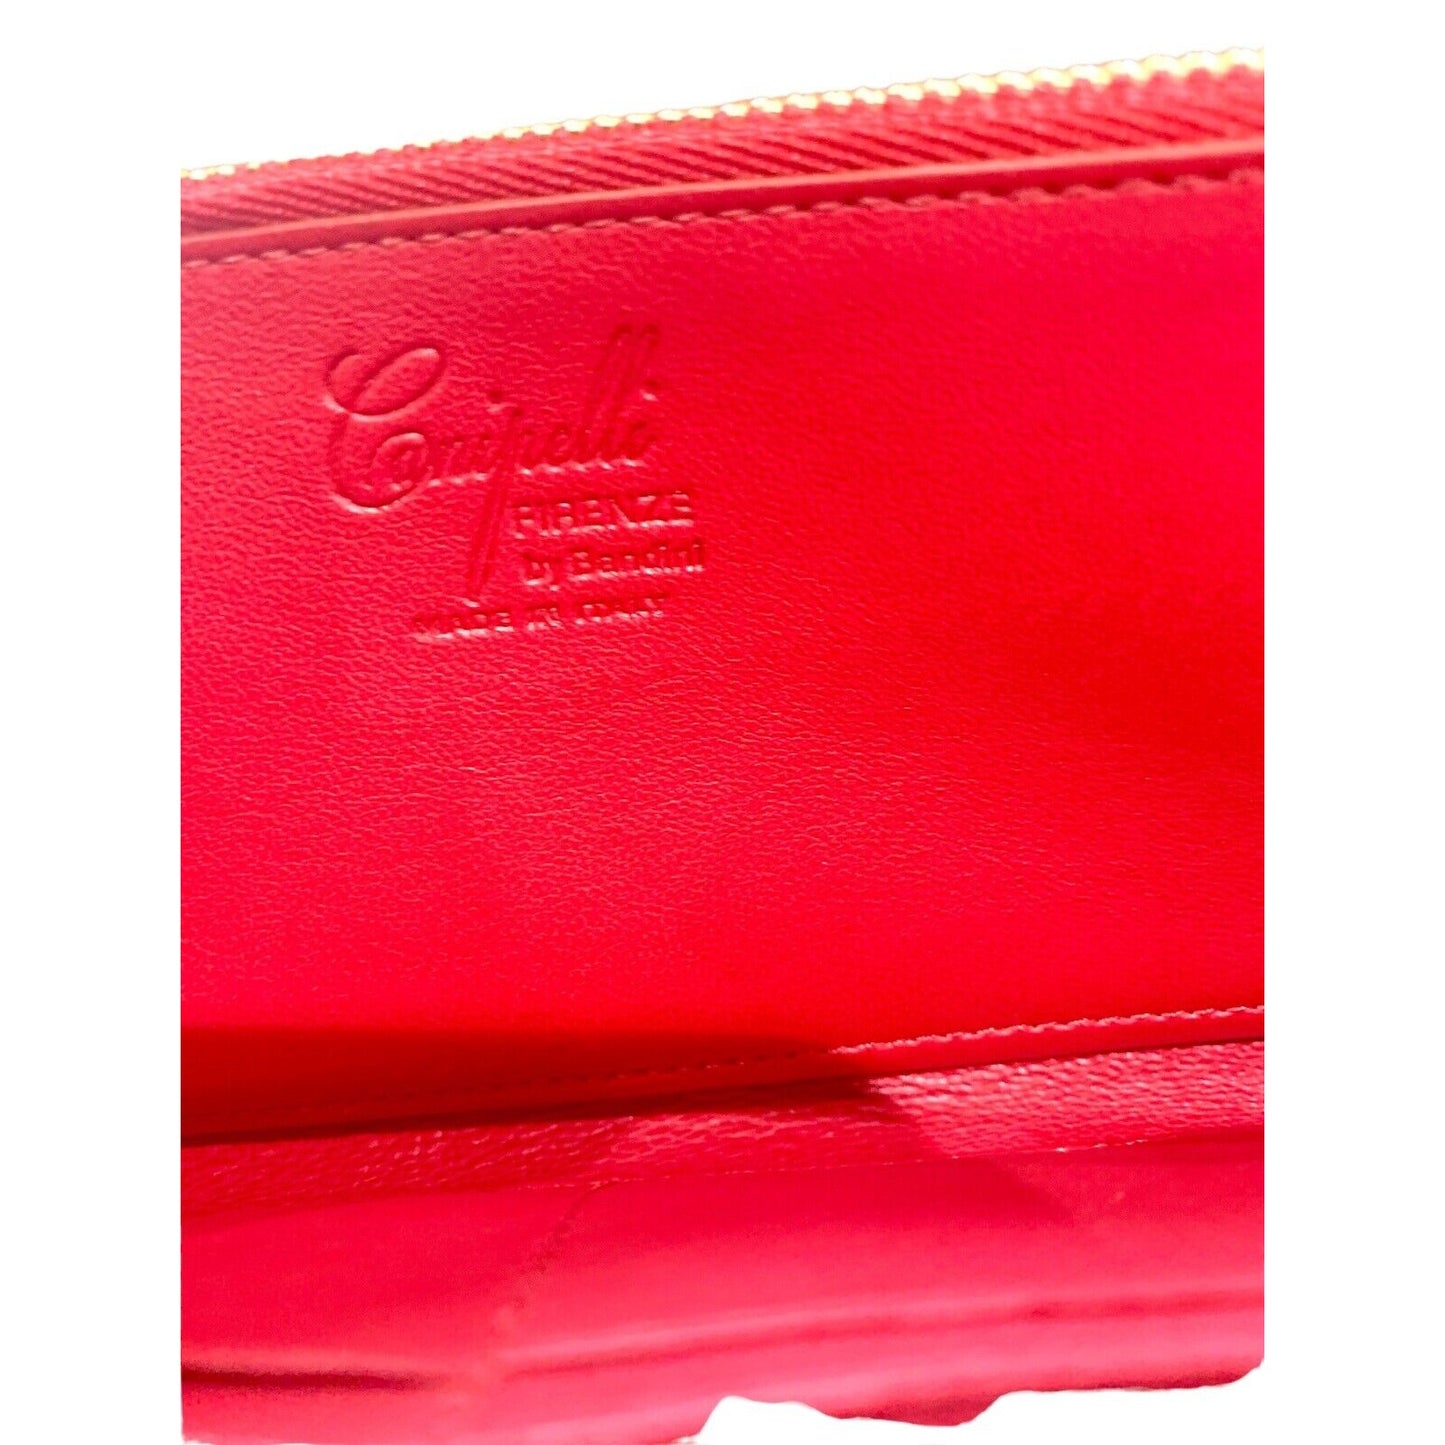 Canipelli Firenze Nappa Leather Zip Around Wallet